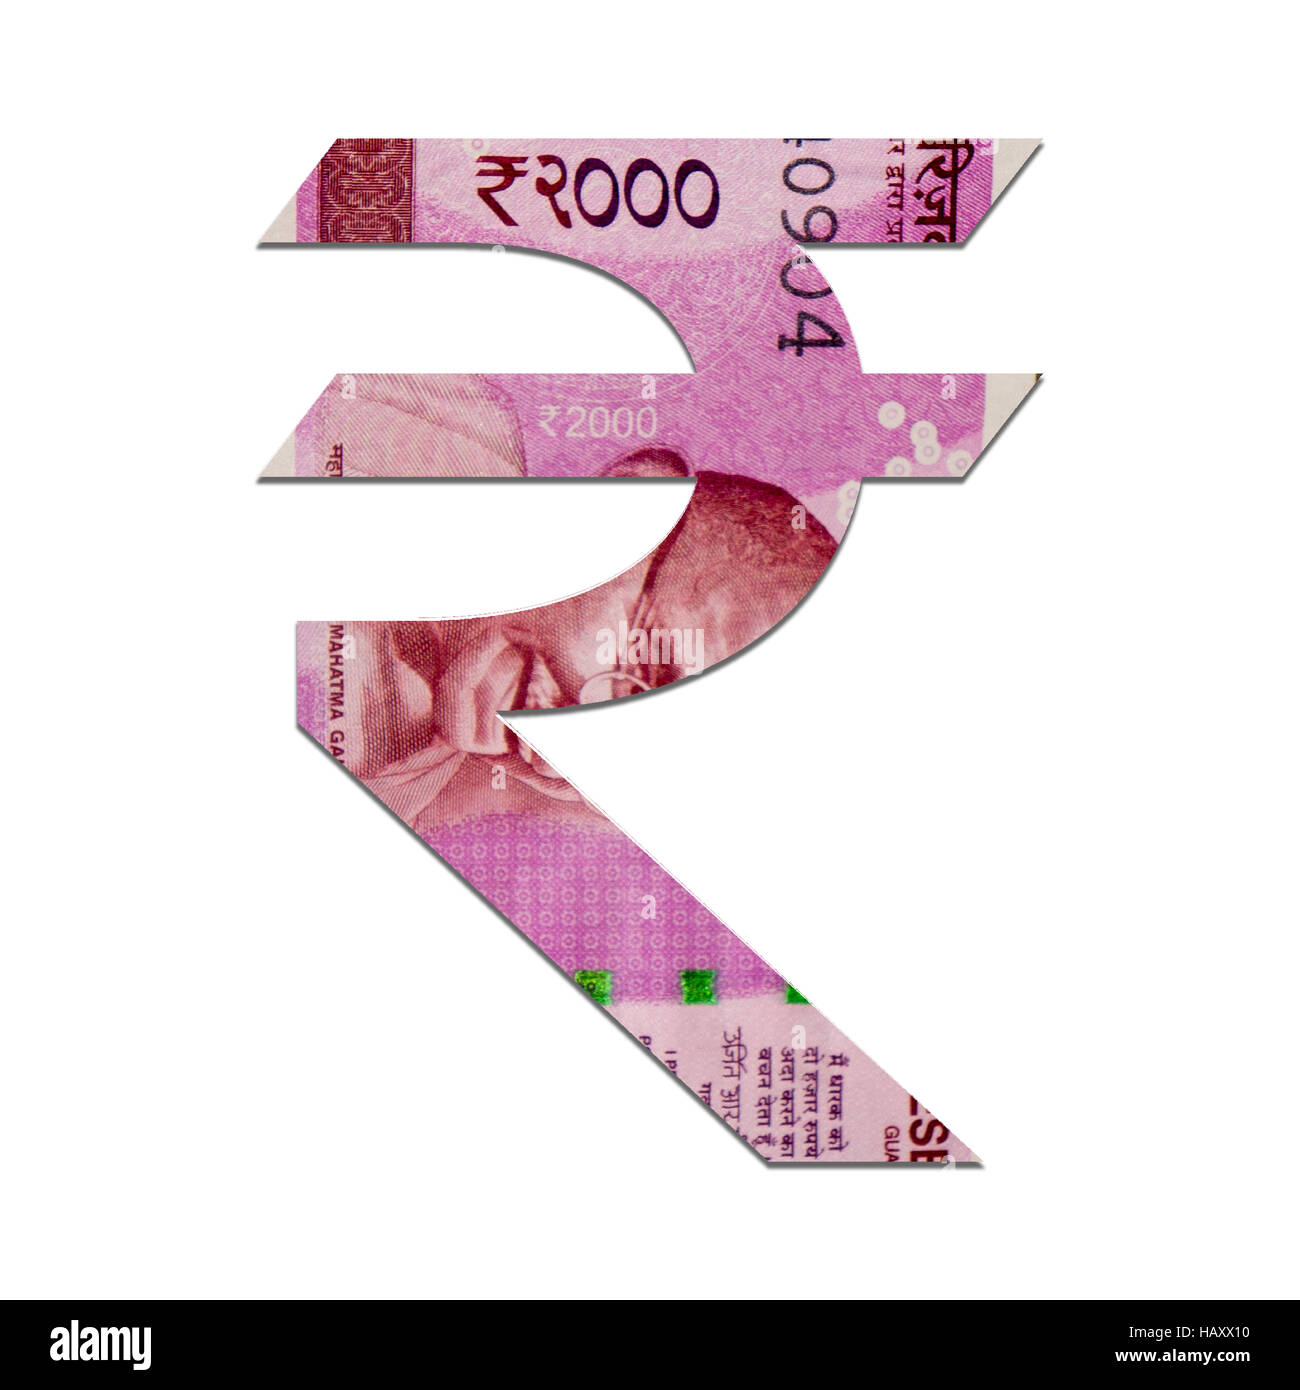 2000 rupees in rupee symbol Stock Photo